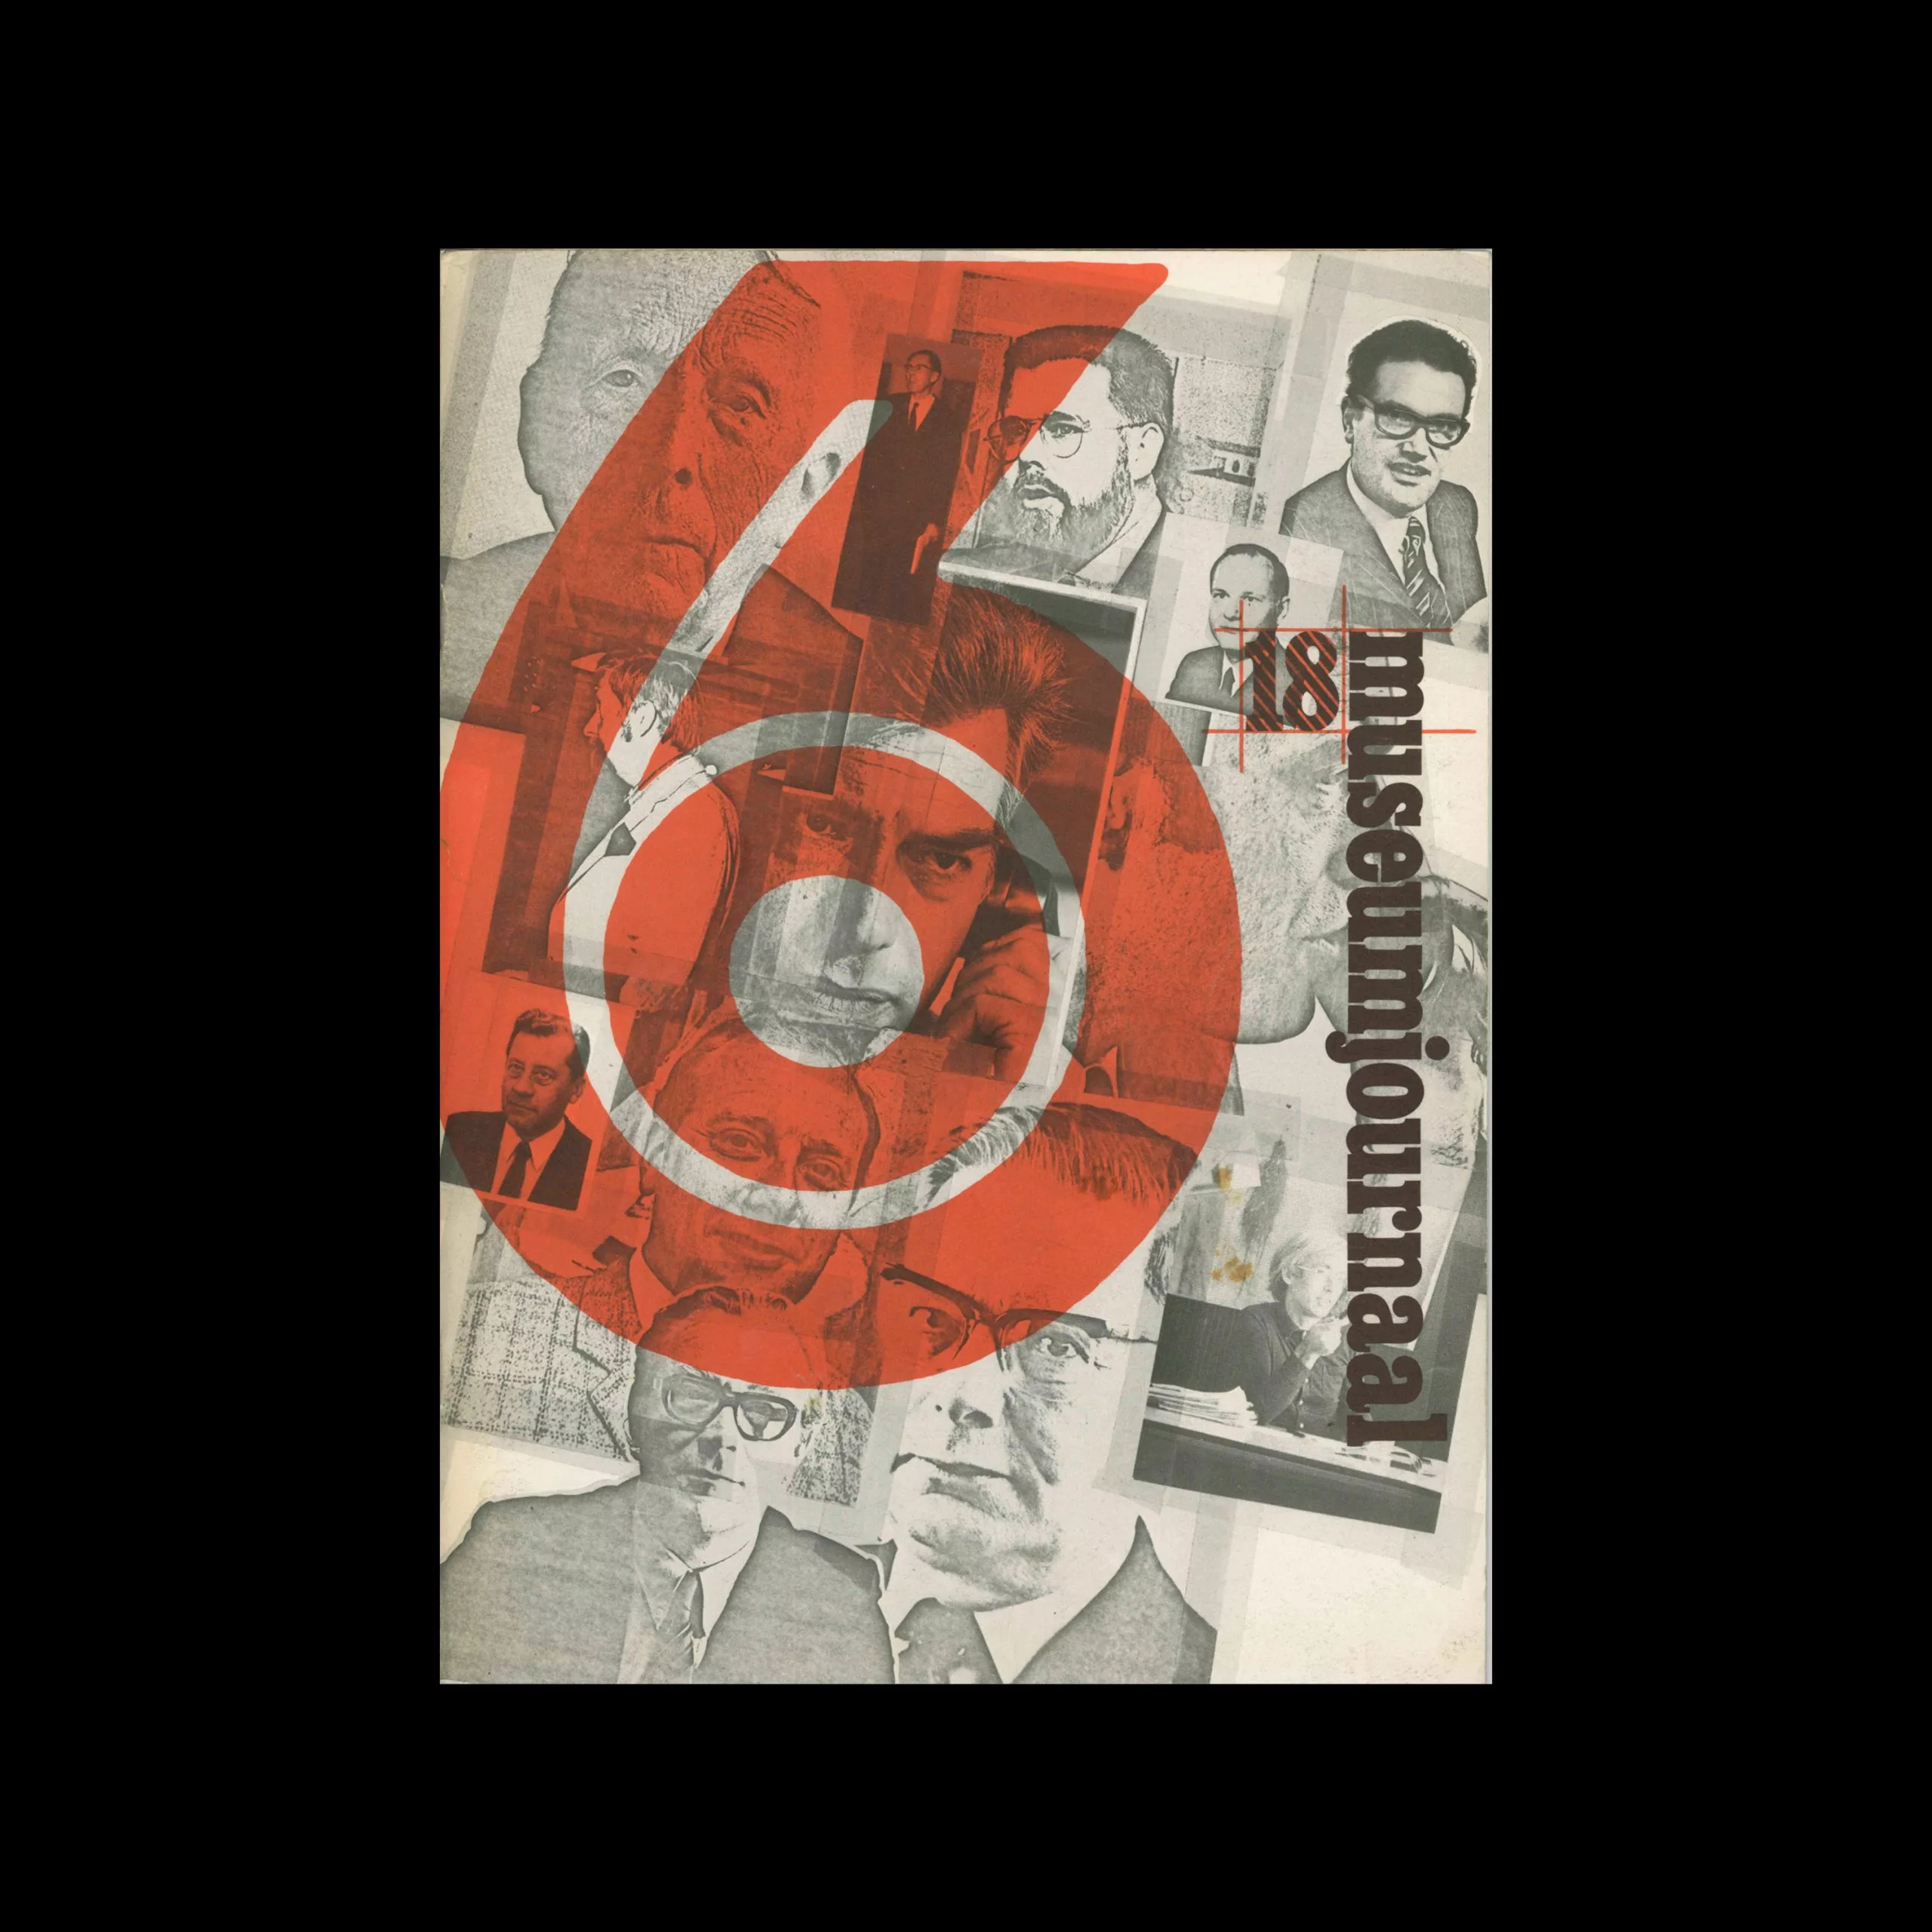 Museumjournaal, Serie 18 no6, 1973. Frank Steenhagen (cover), Jurriaan Schrofer (layout)